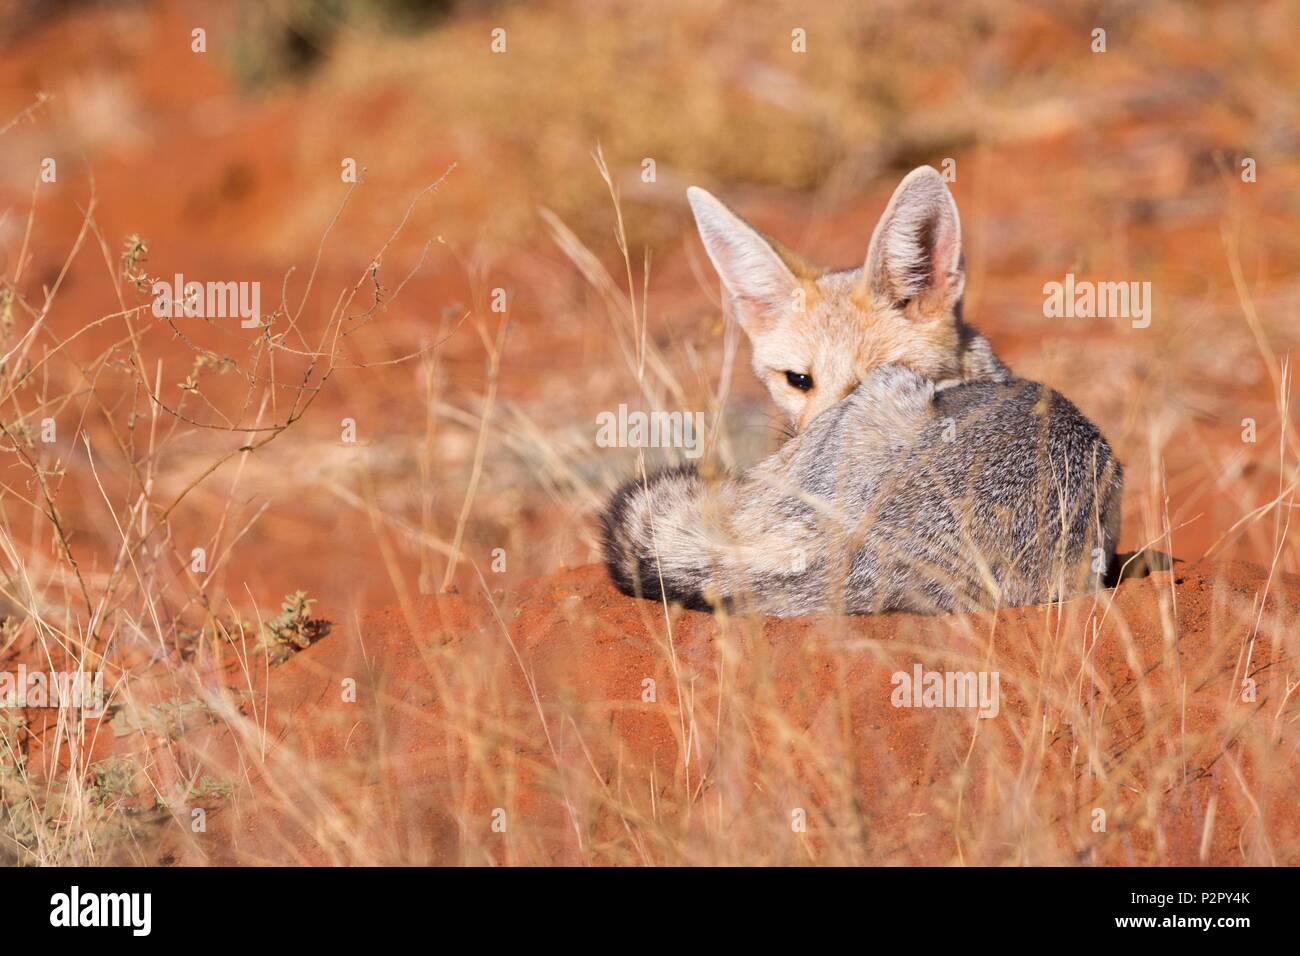 Sud Africa, Deserto Kalahari, Capo volpe (Vulpes vulpes chama), riposo Foto Stock